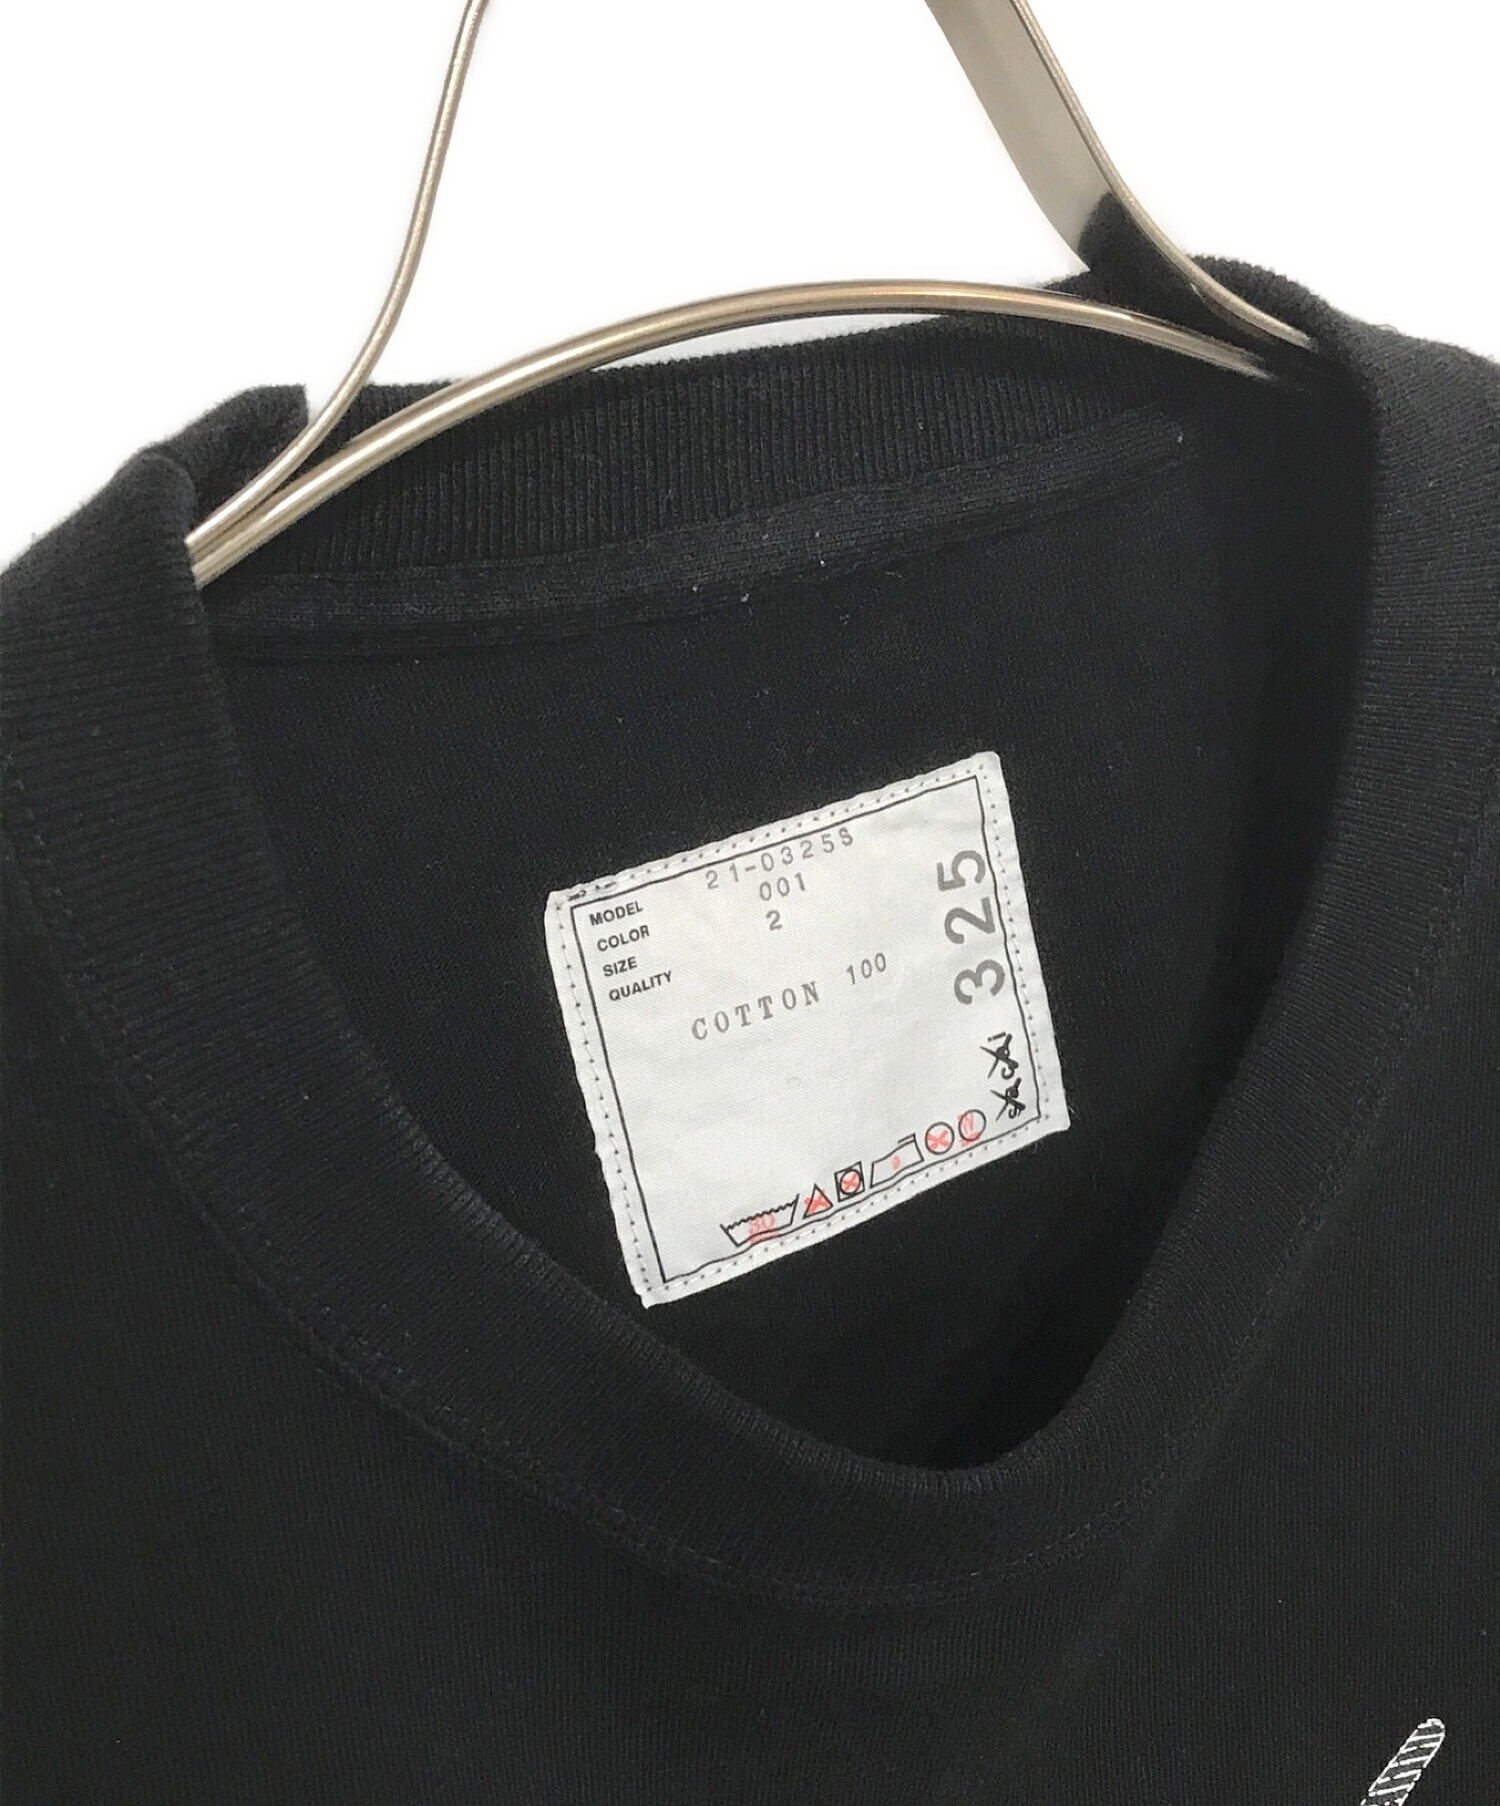 sacai x KAWS (サカイ×カウズ) プリントTシャツ / Print T-SHIRT TOKYO FIRST ブラック サイズ:2